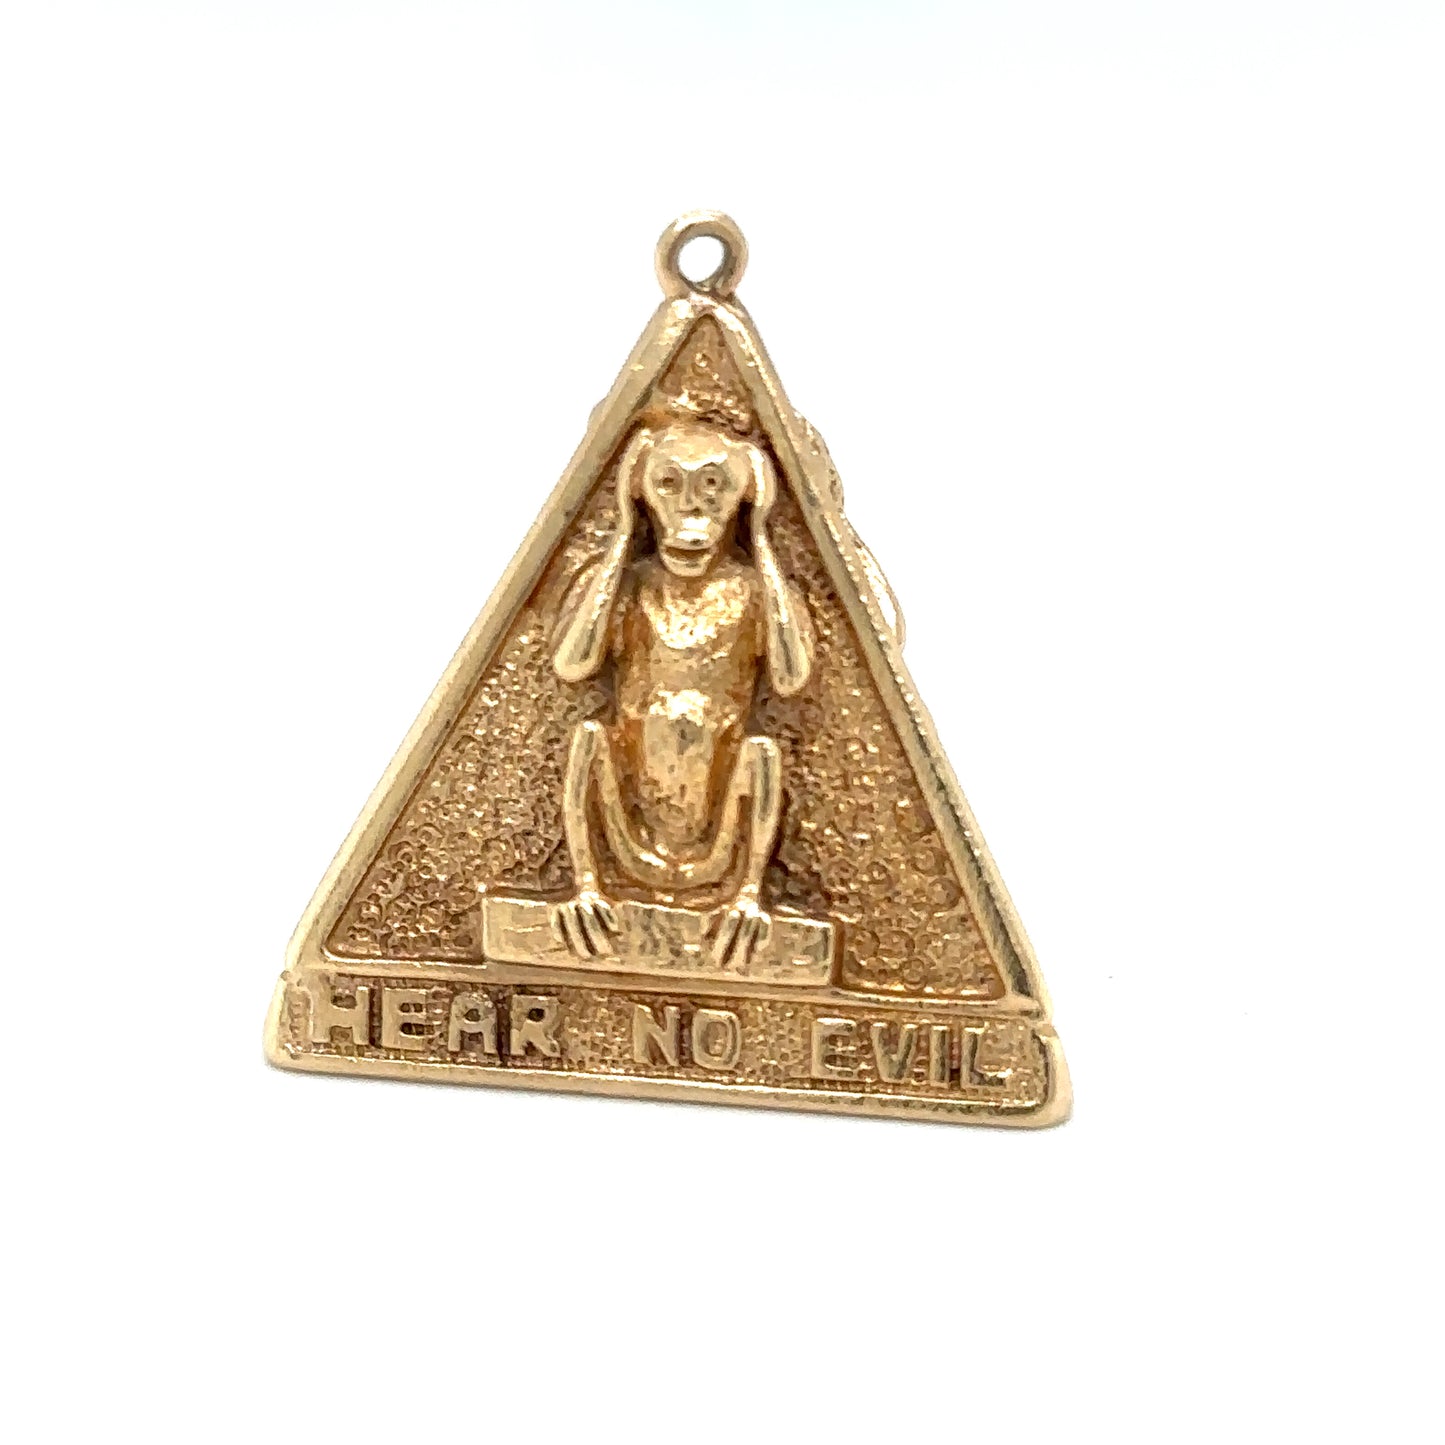 Circa 1980s Three Wise Monkeys Pyramid Pendant in 14K Gold